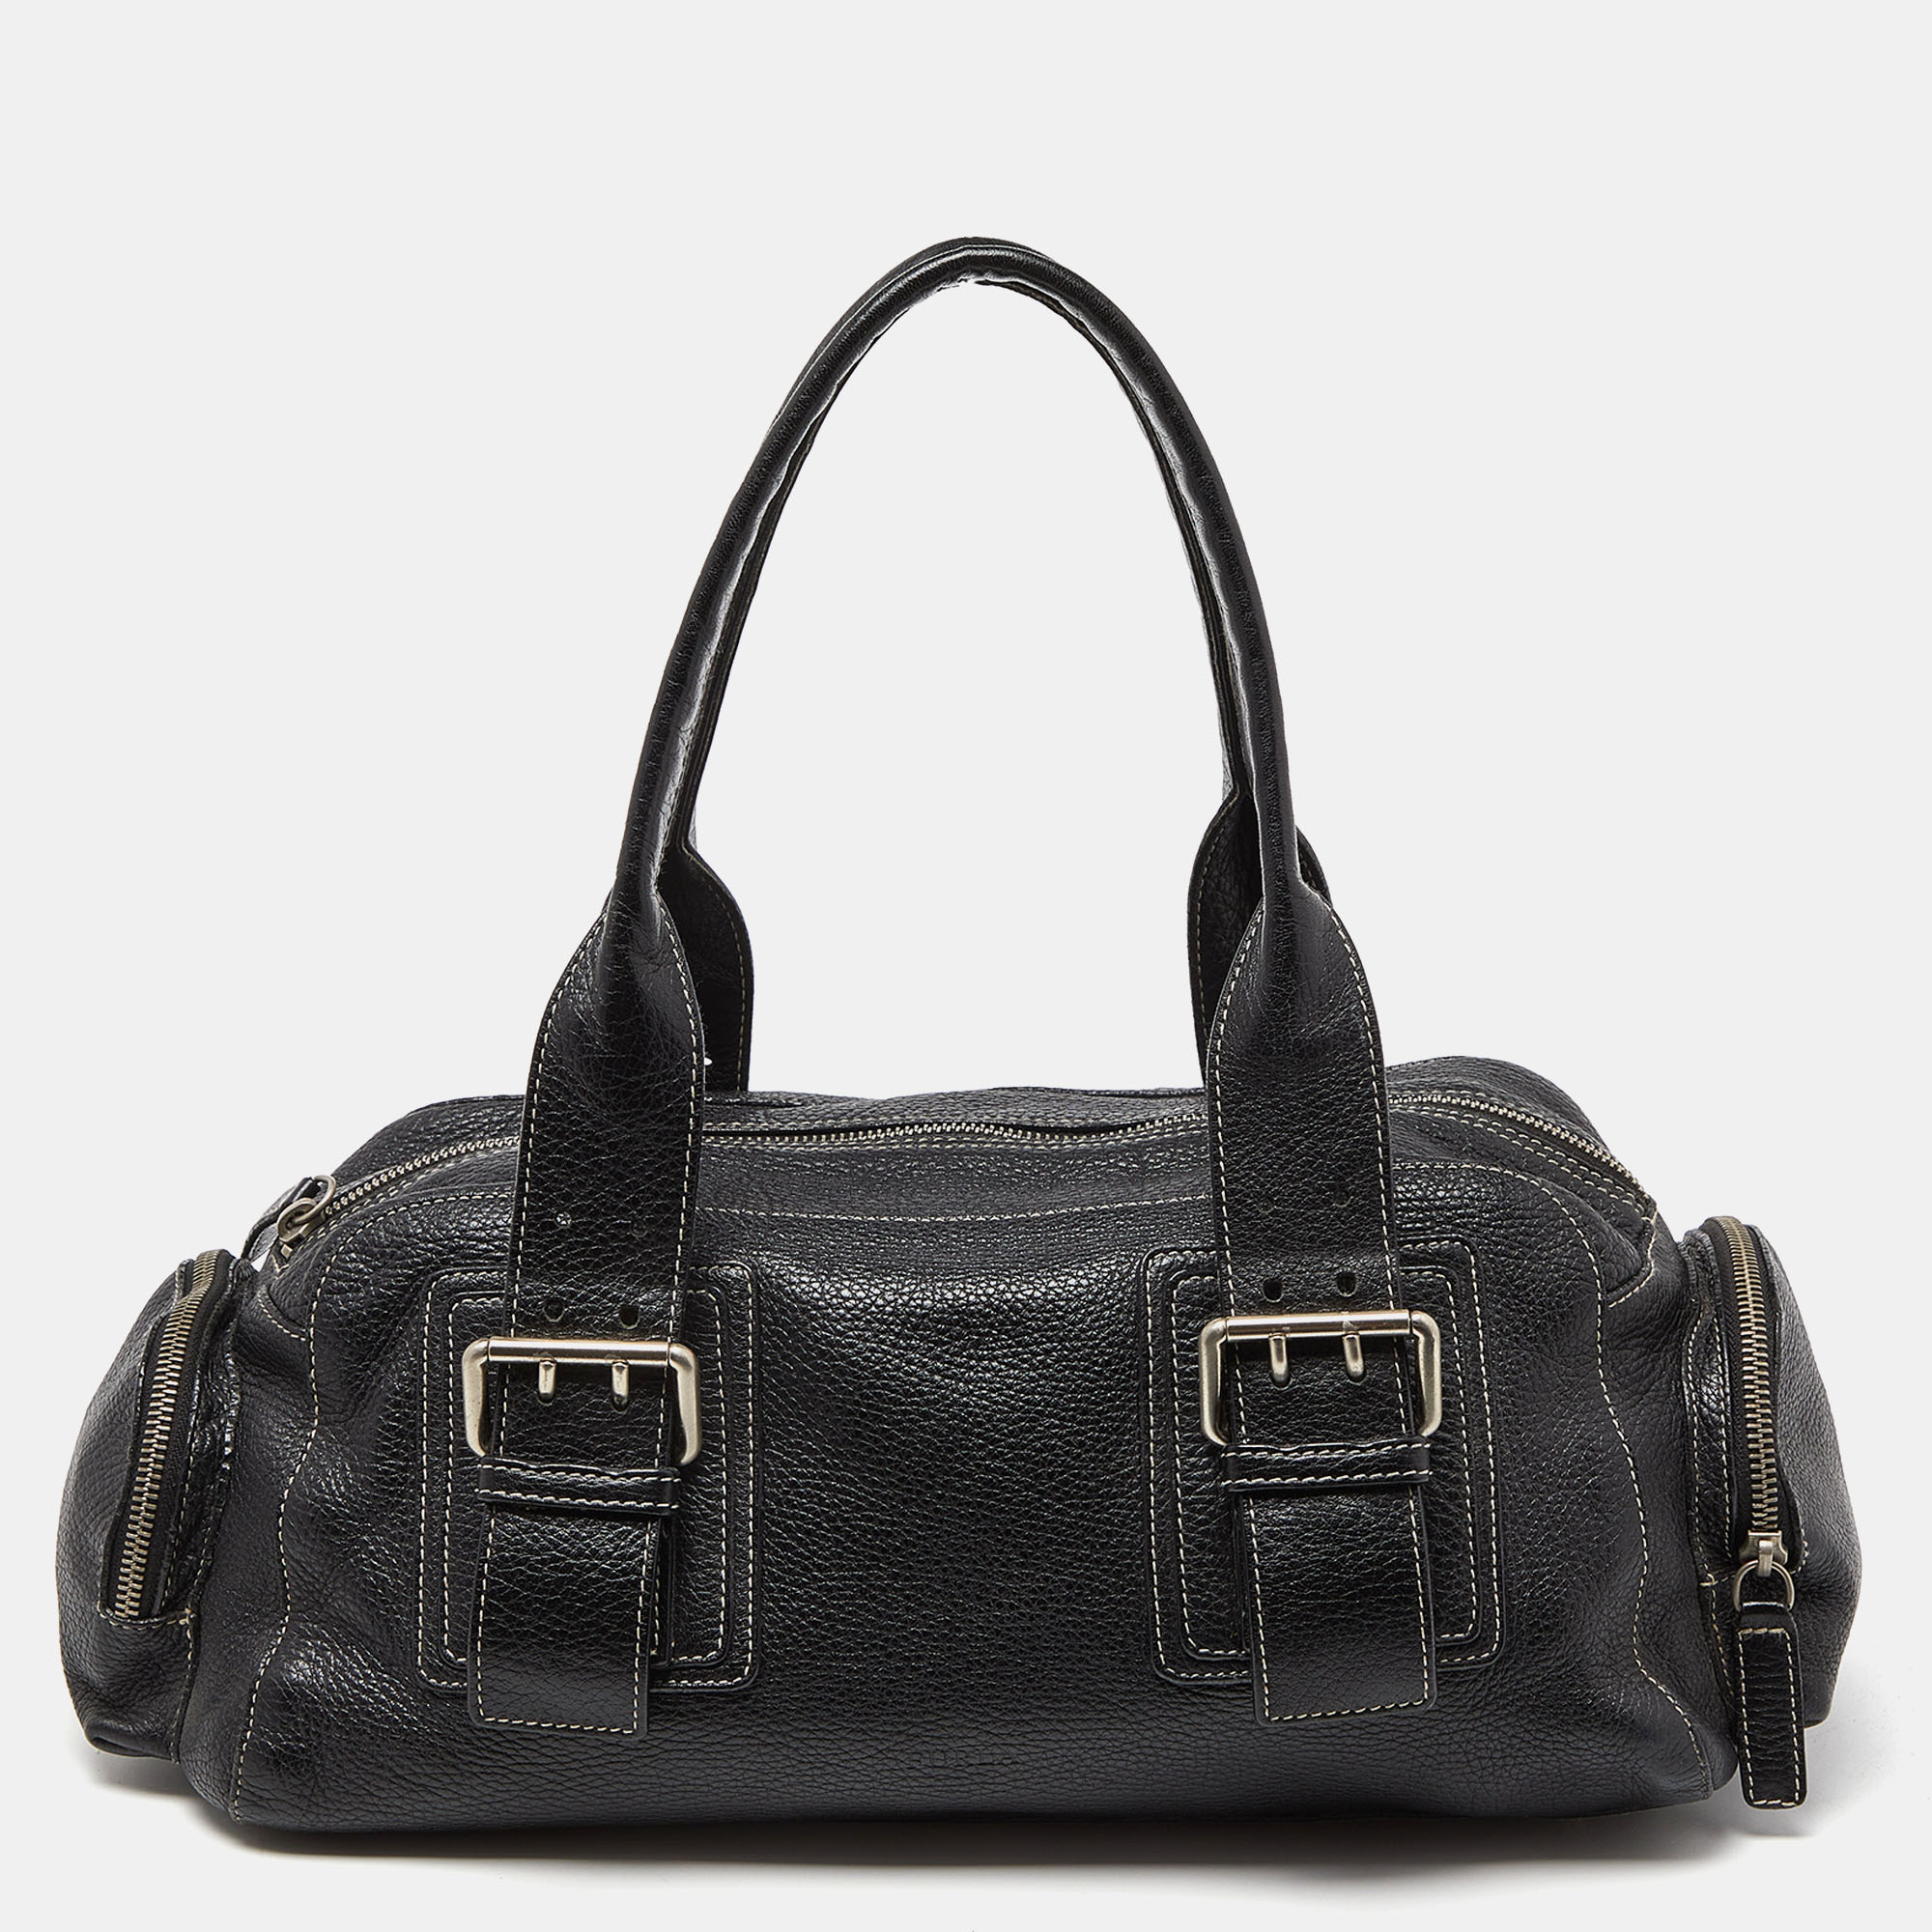 Furla black leather buckle satchel